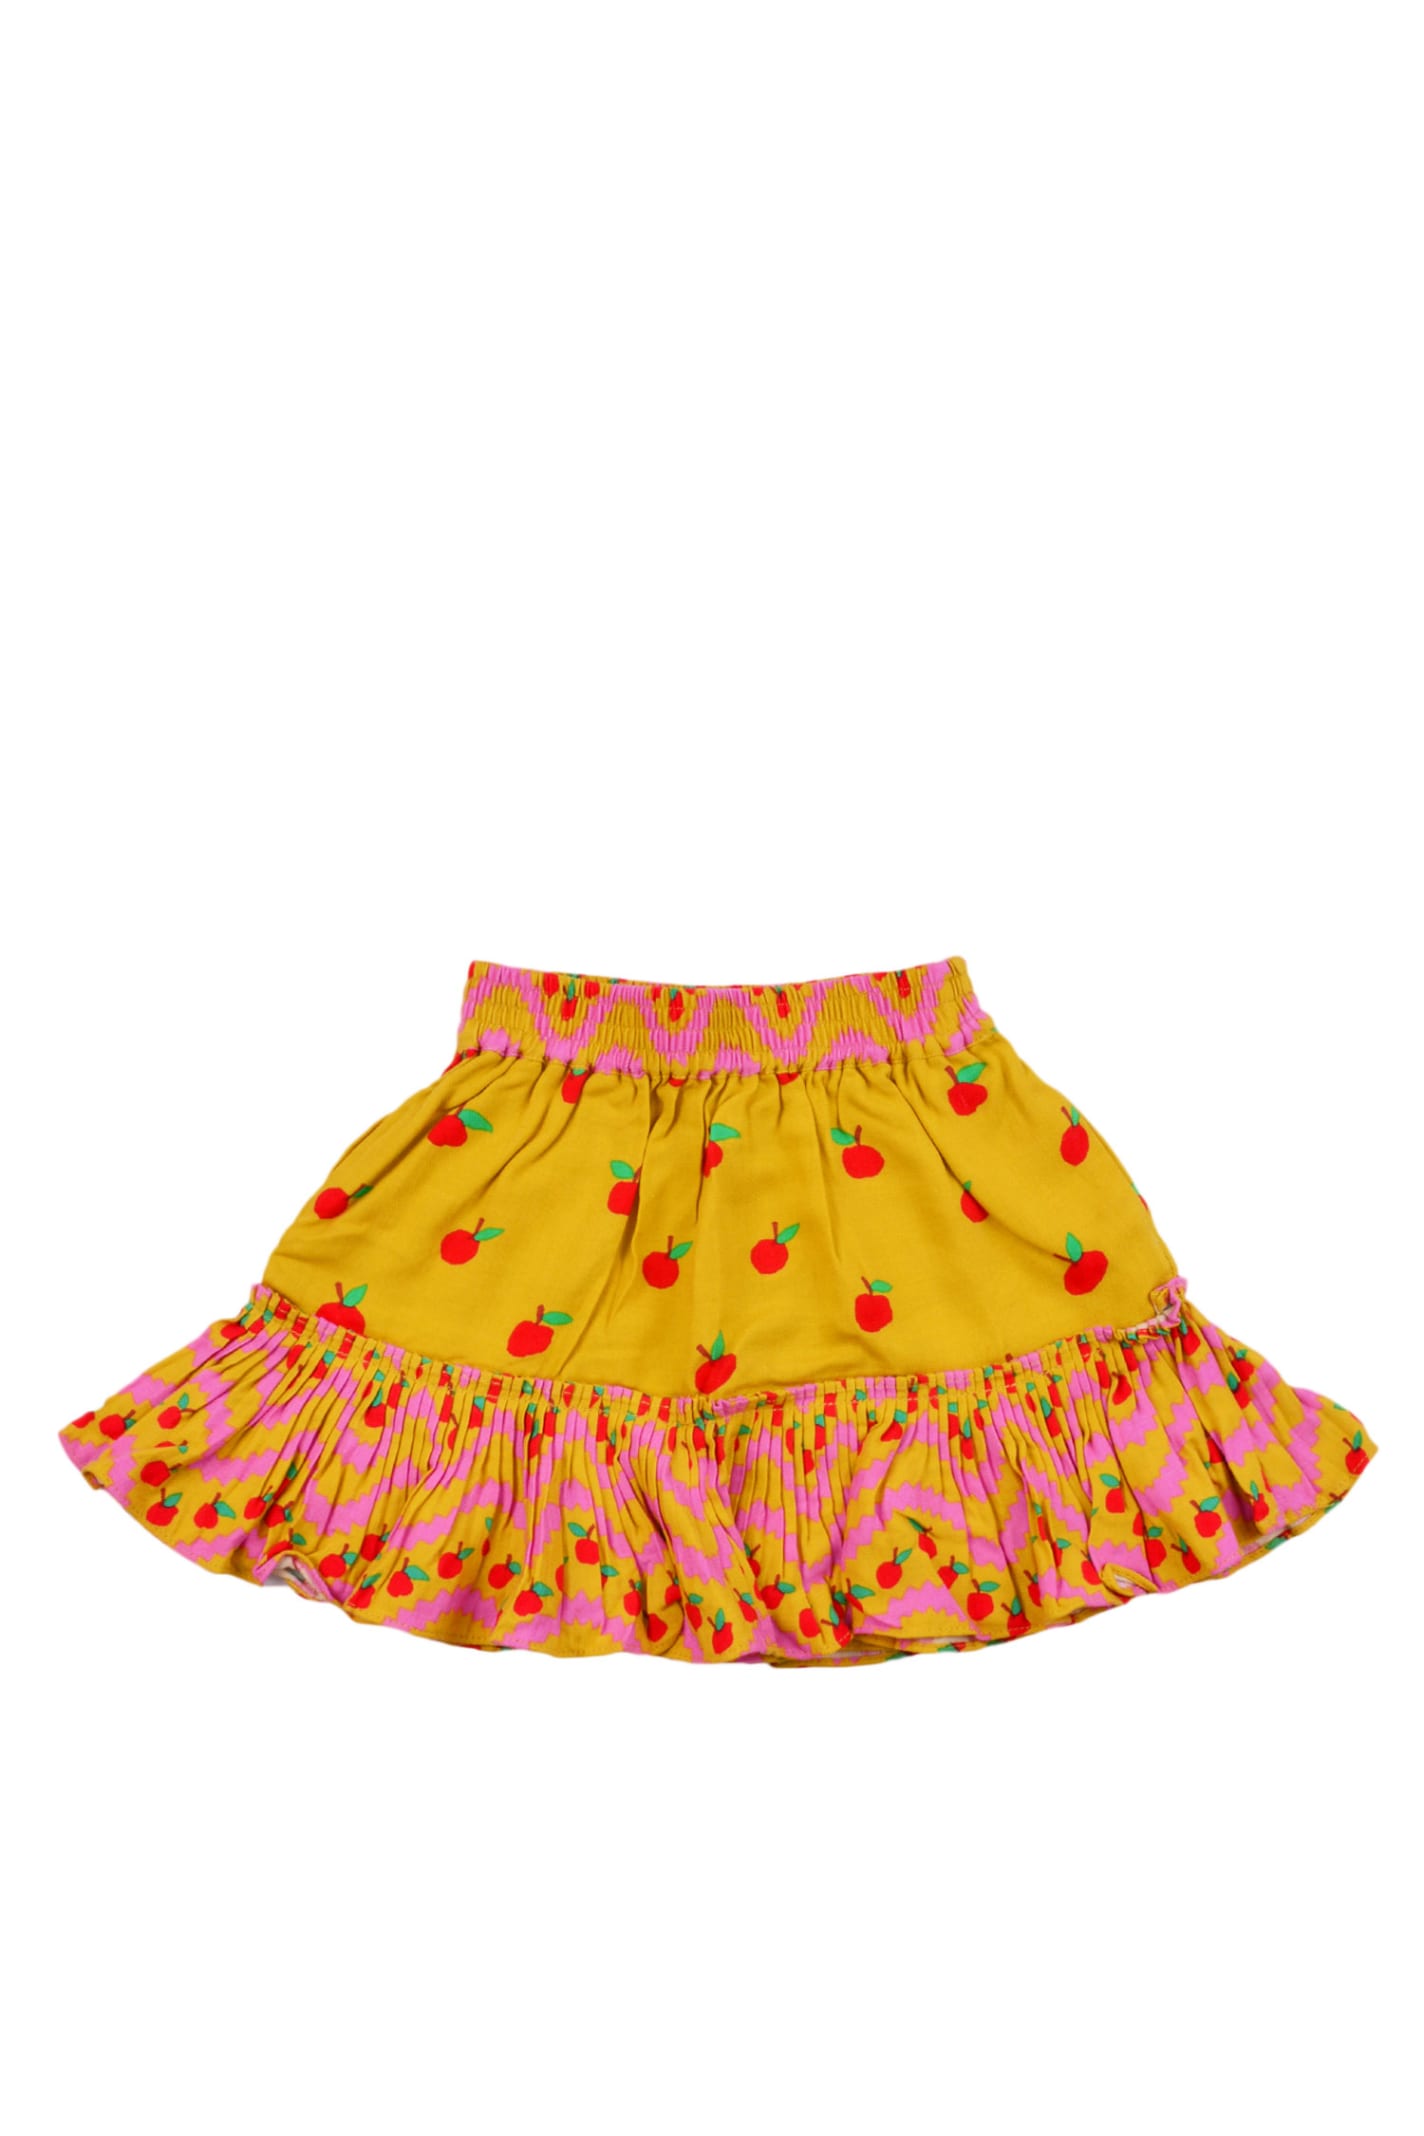 Stella McCartney Kids Printed Ruffled Skirt